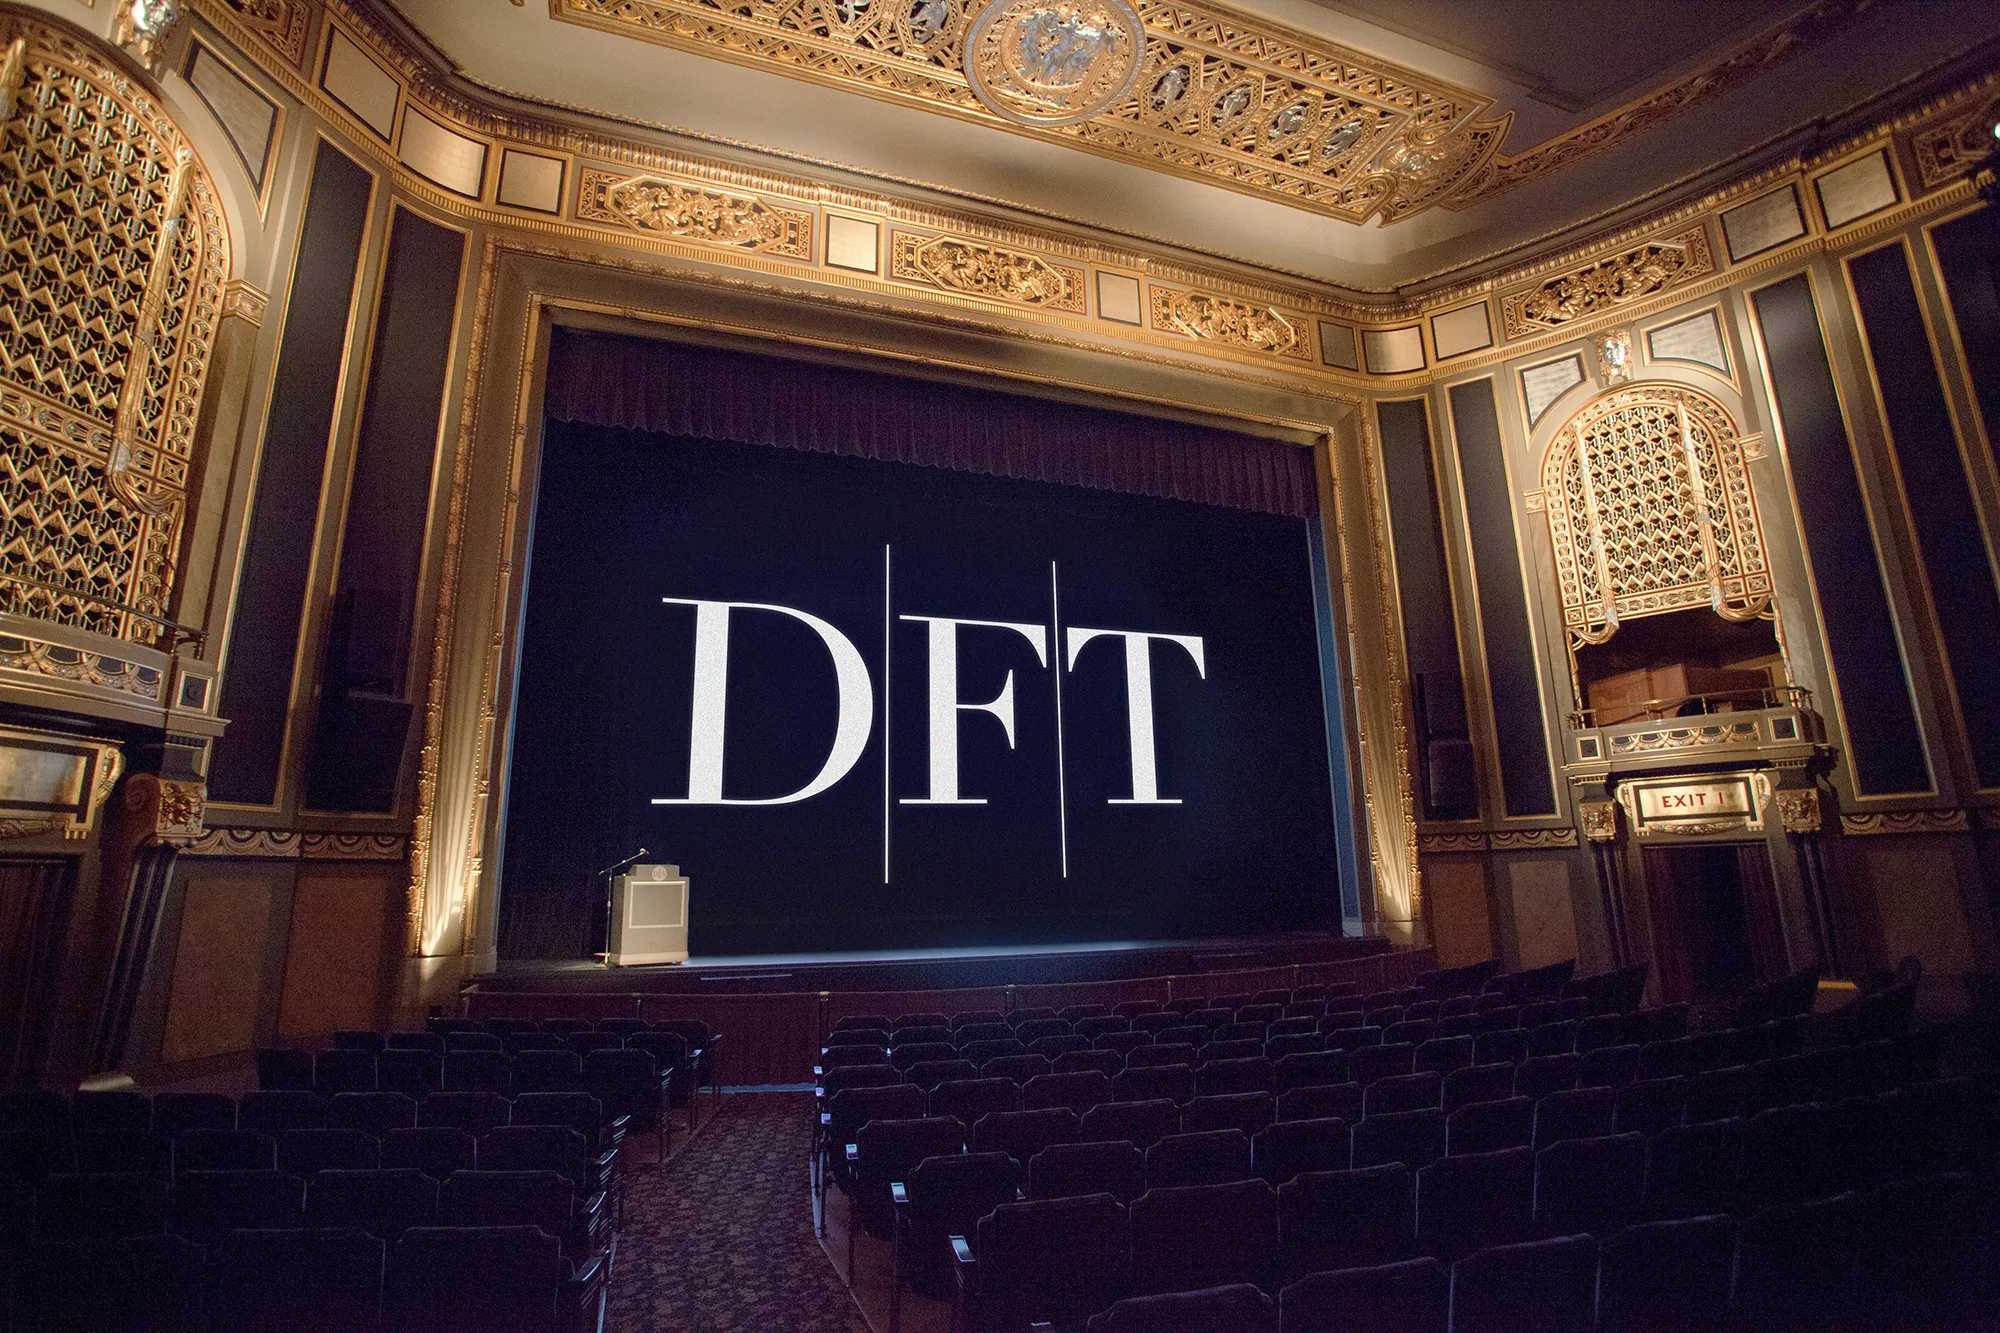 The Detroit Film Theatre stage